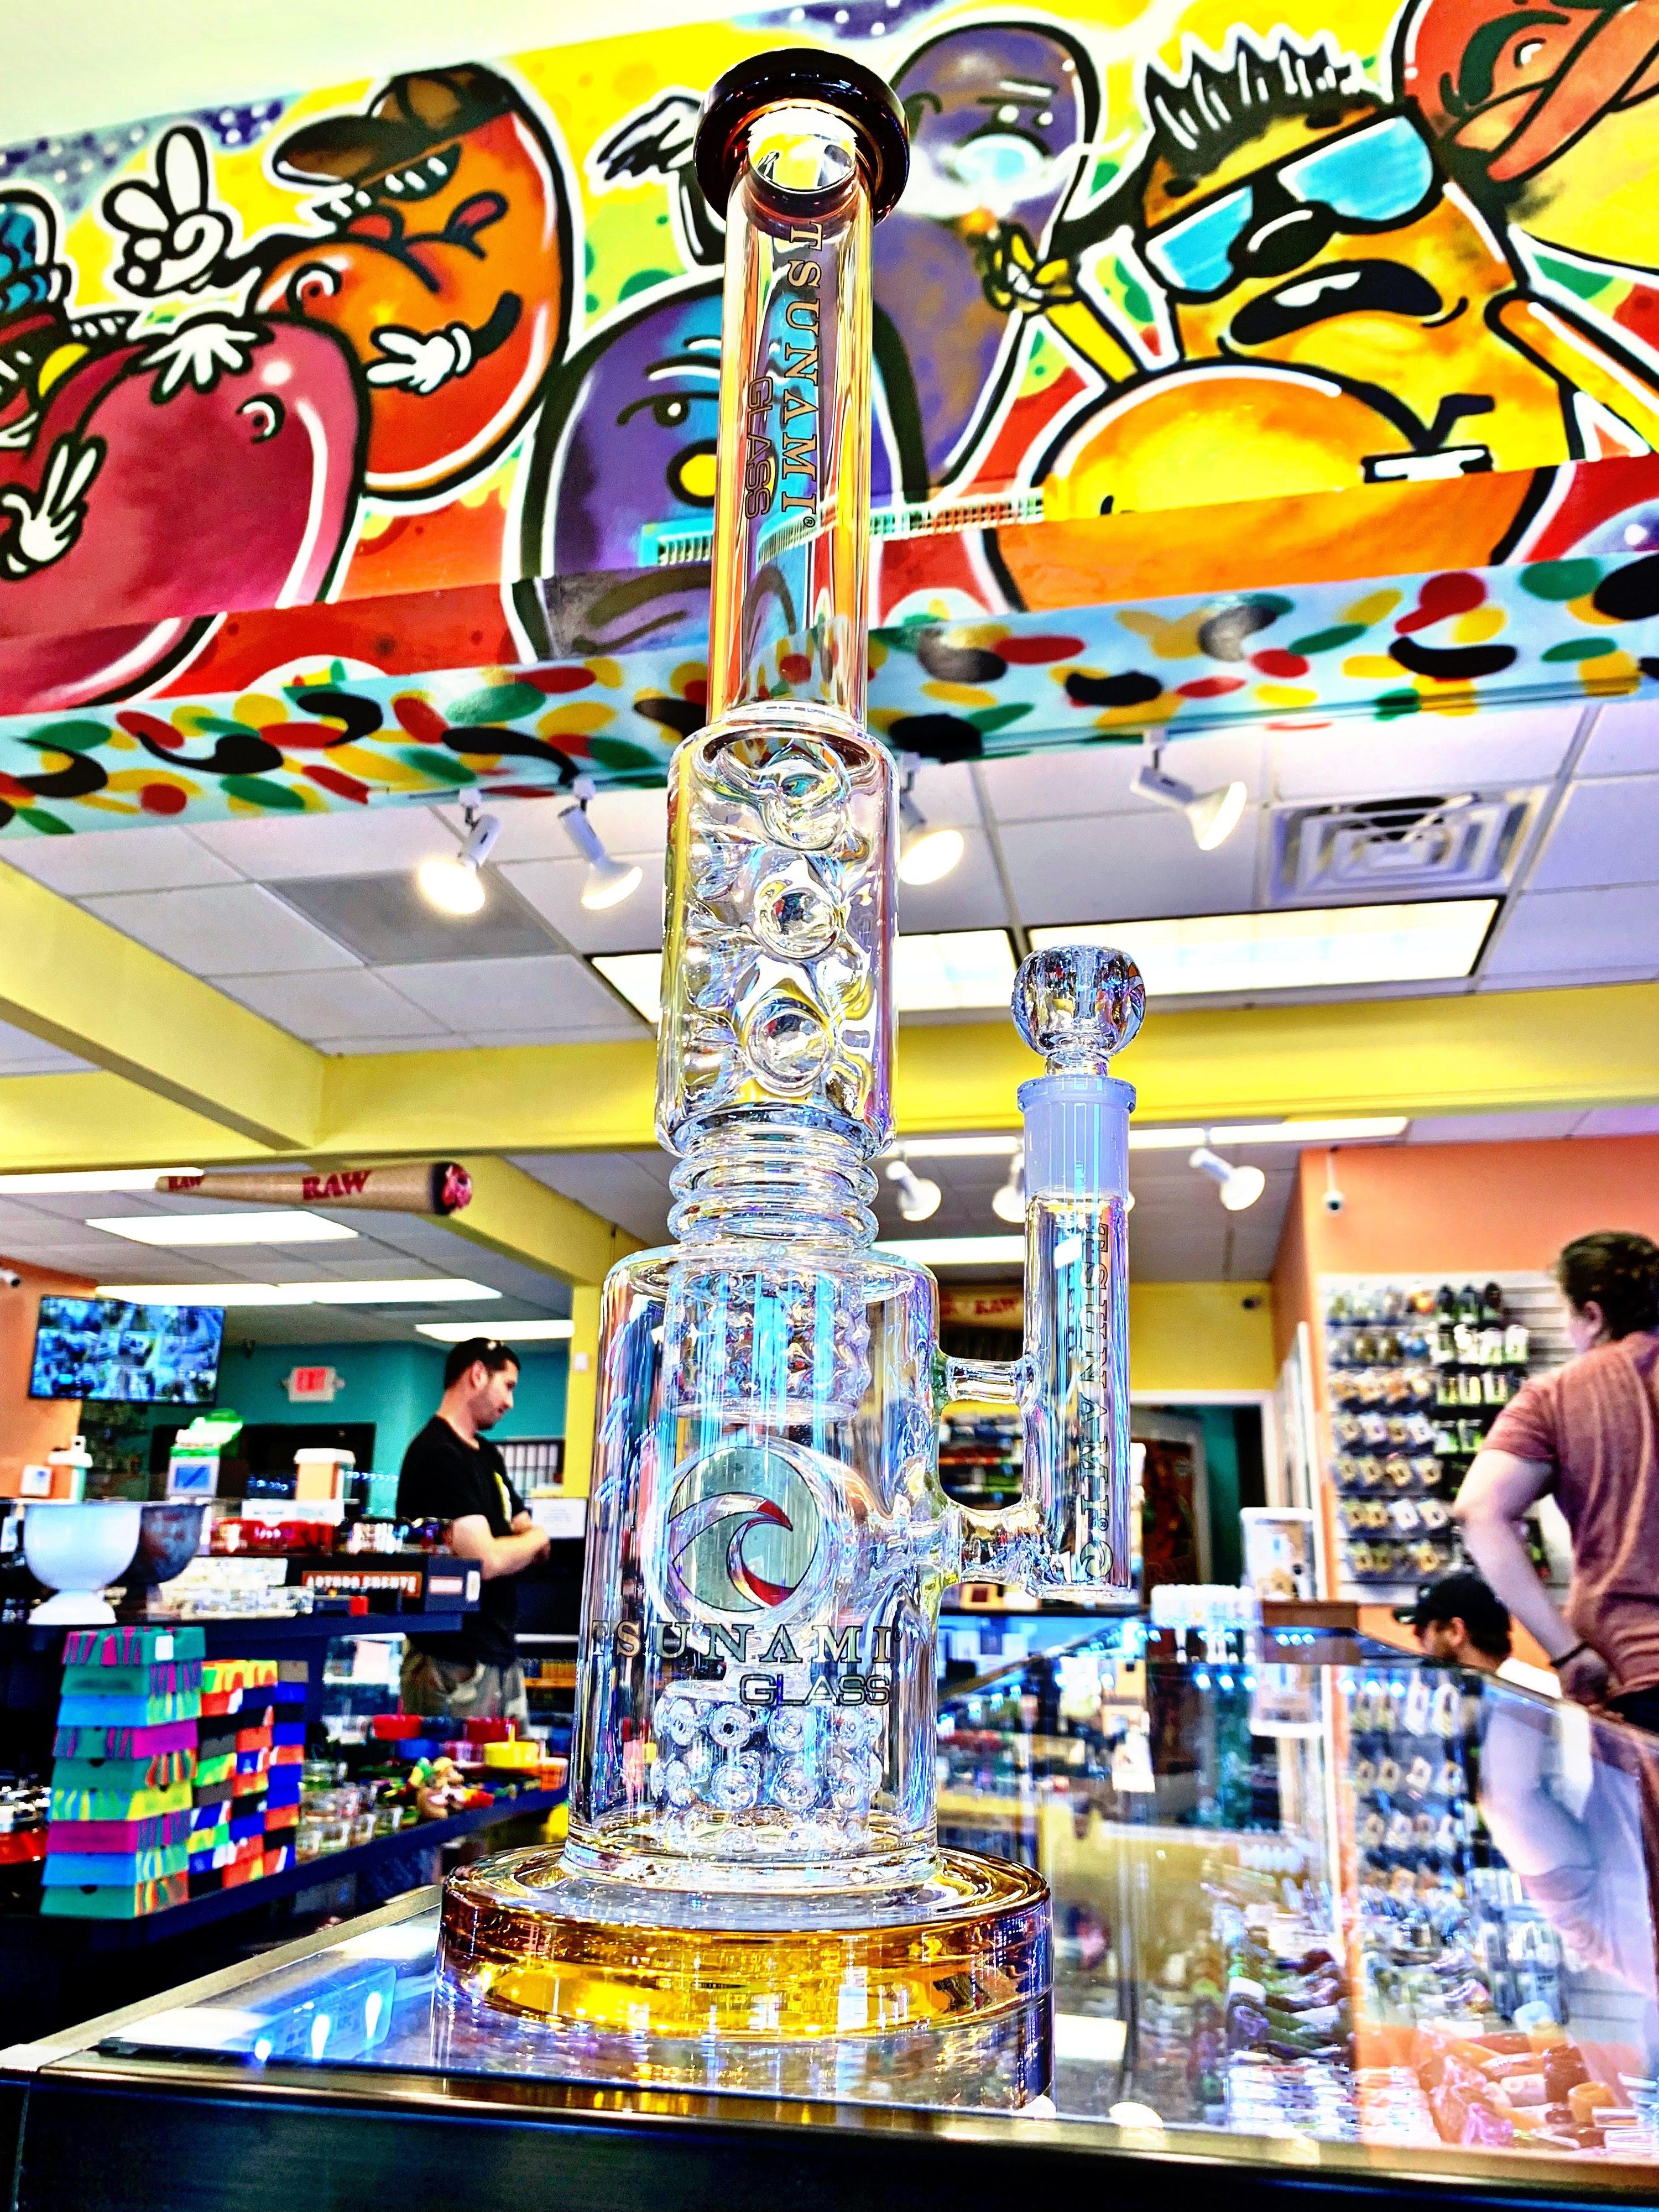 Lotus Vape & Smoke Shop - Fort Myers Photo